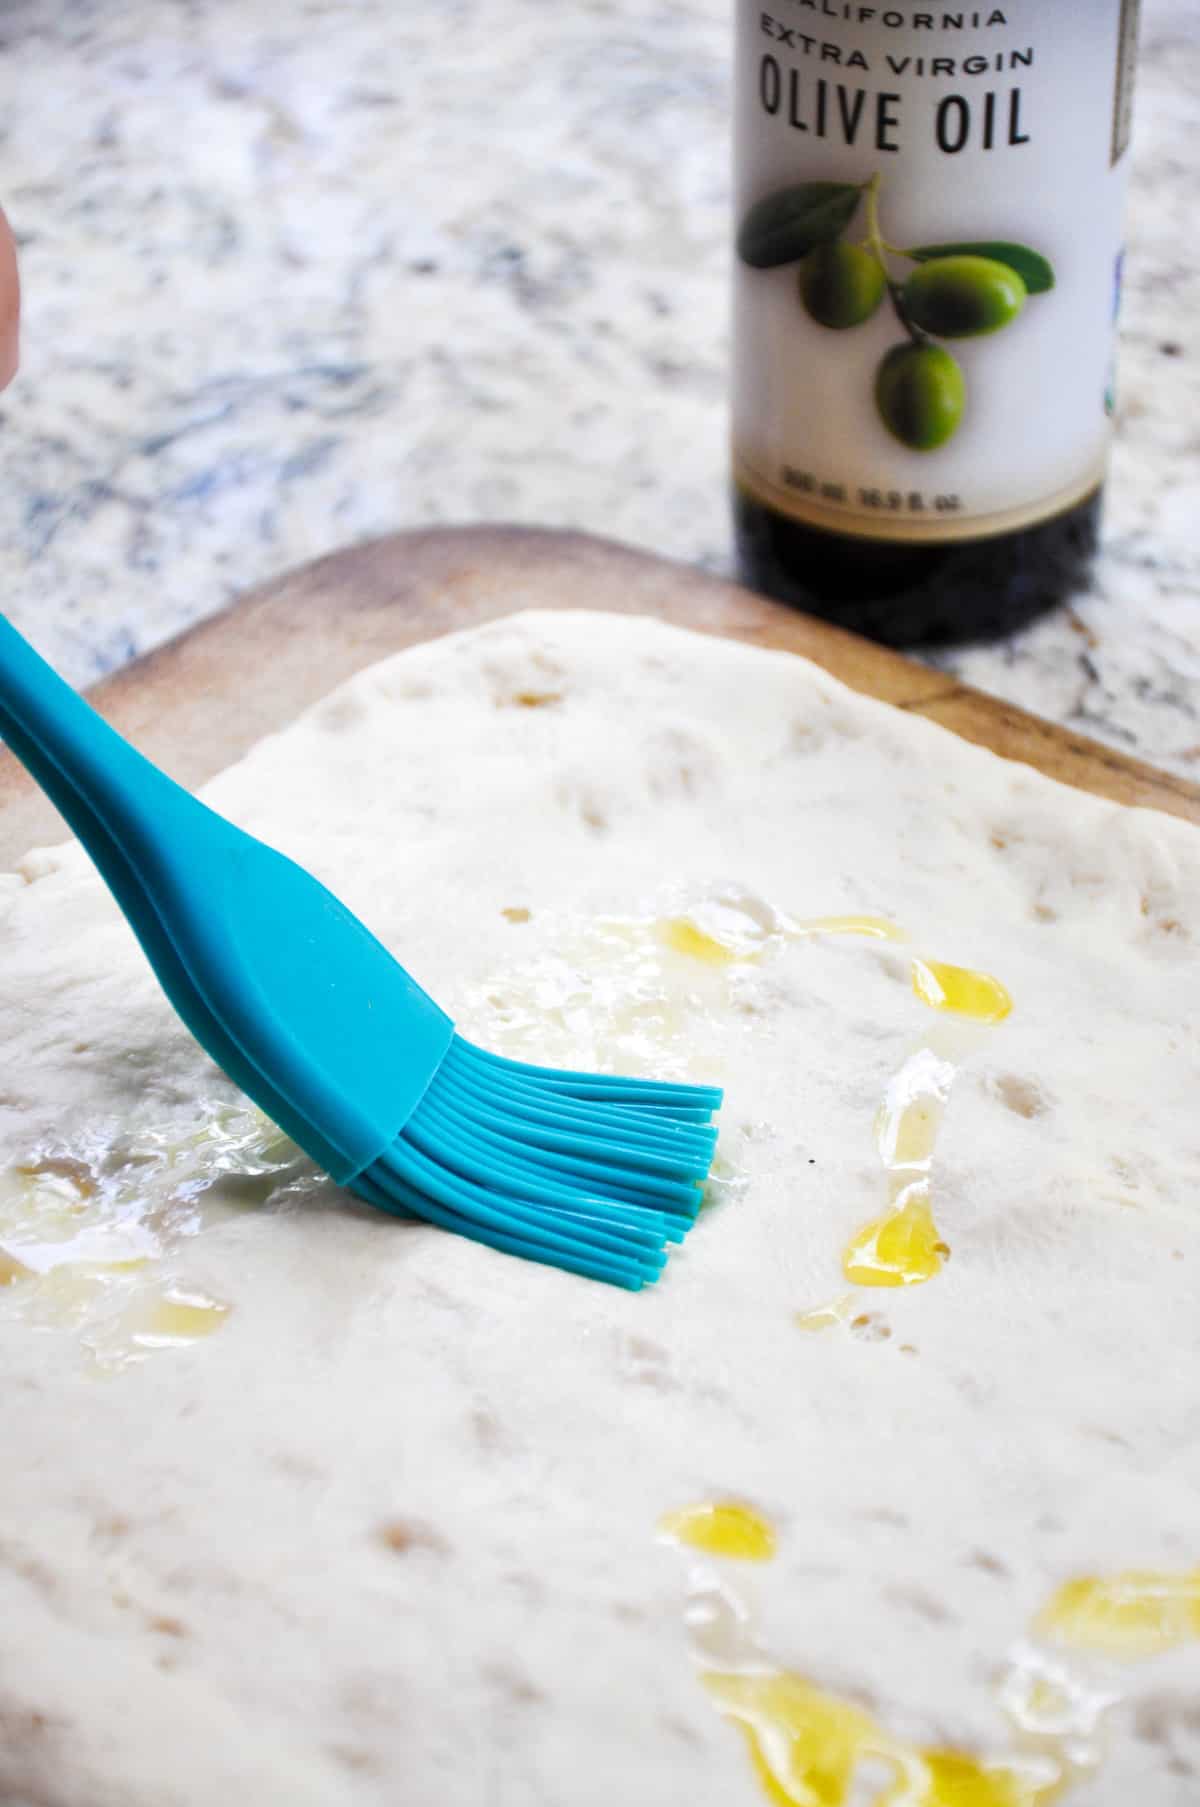 Spread extra virgin olive oil over dough